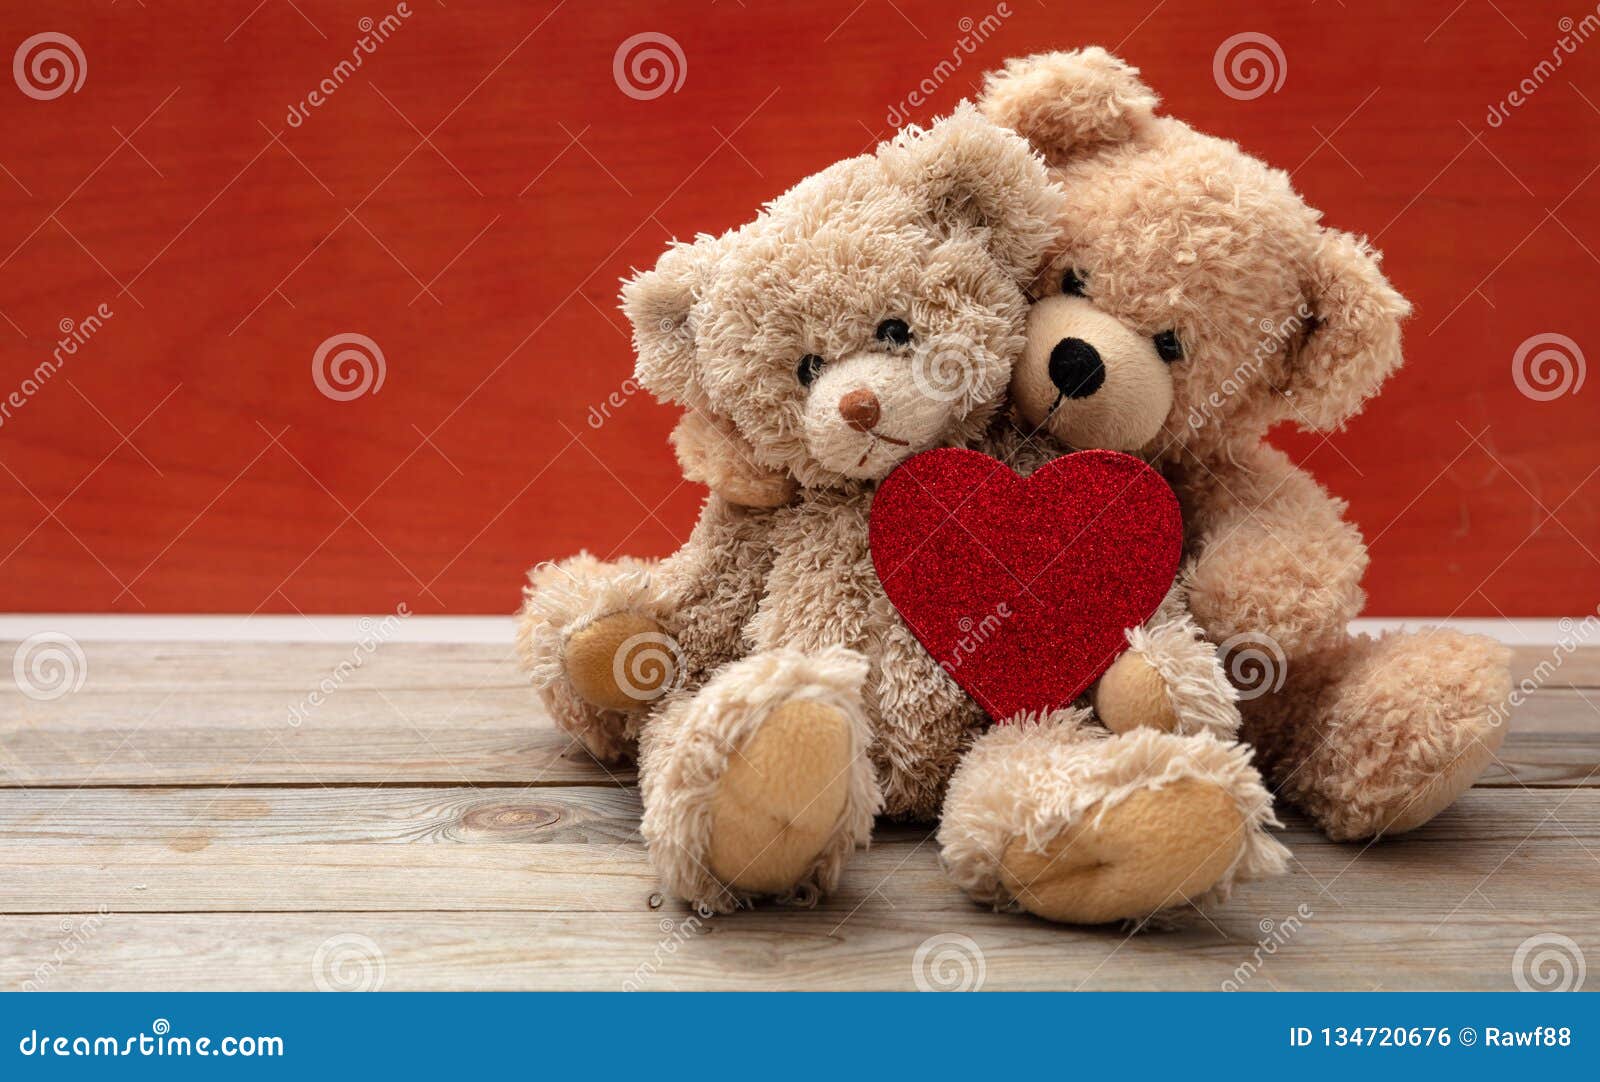 Love, Friendship Concept, Tight Hug. Teddy Bears Couple on Wooden ...